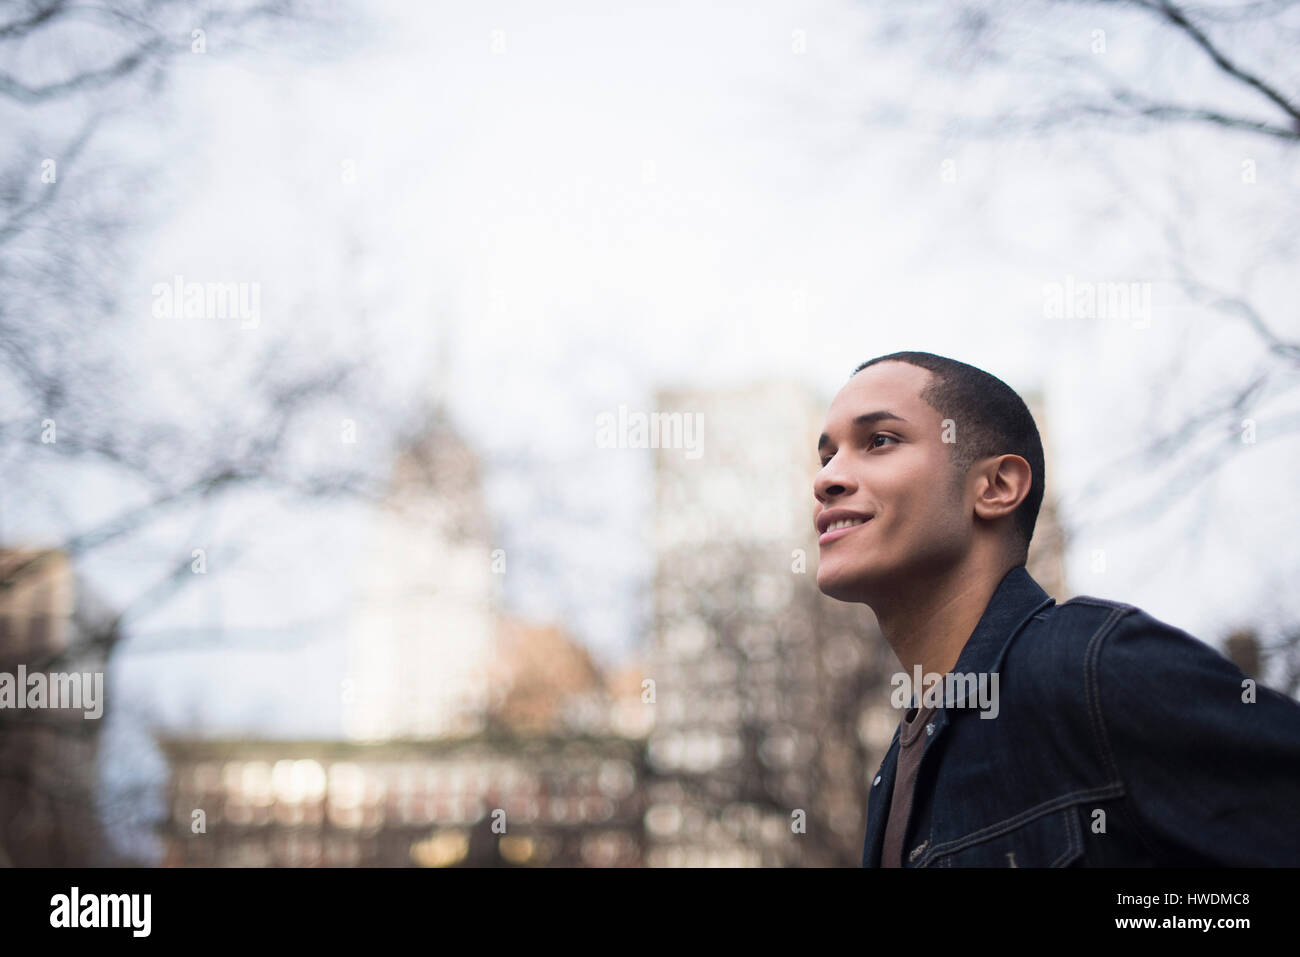 Young man outdoors, Manhattan, New York, USA Stock Photo